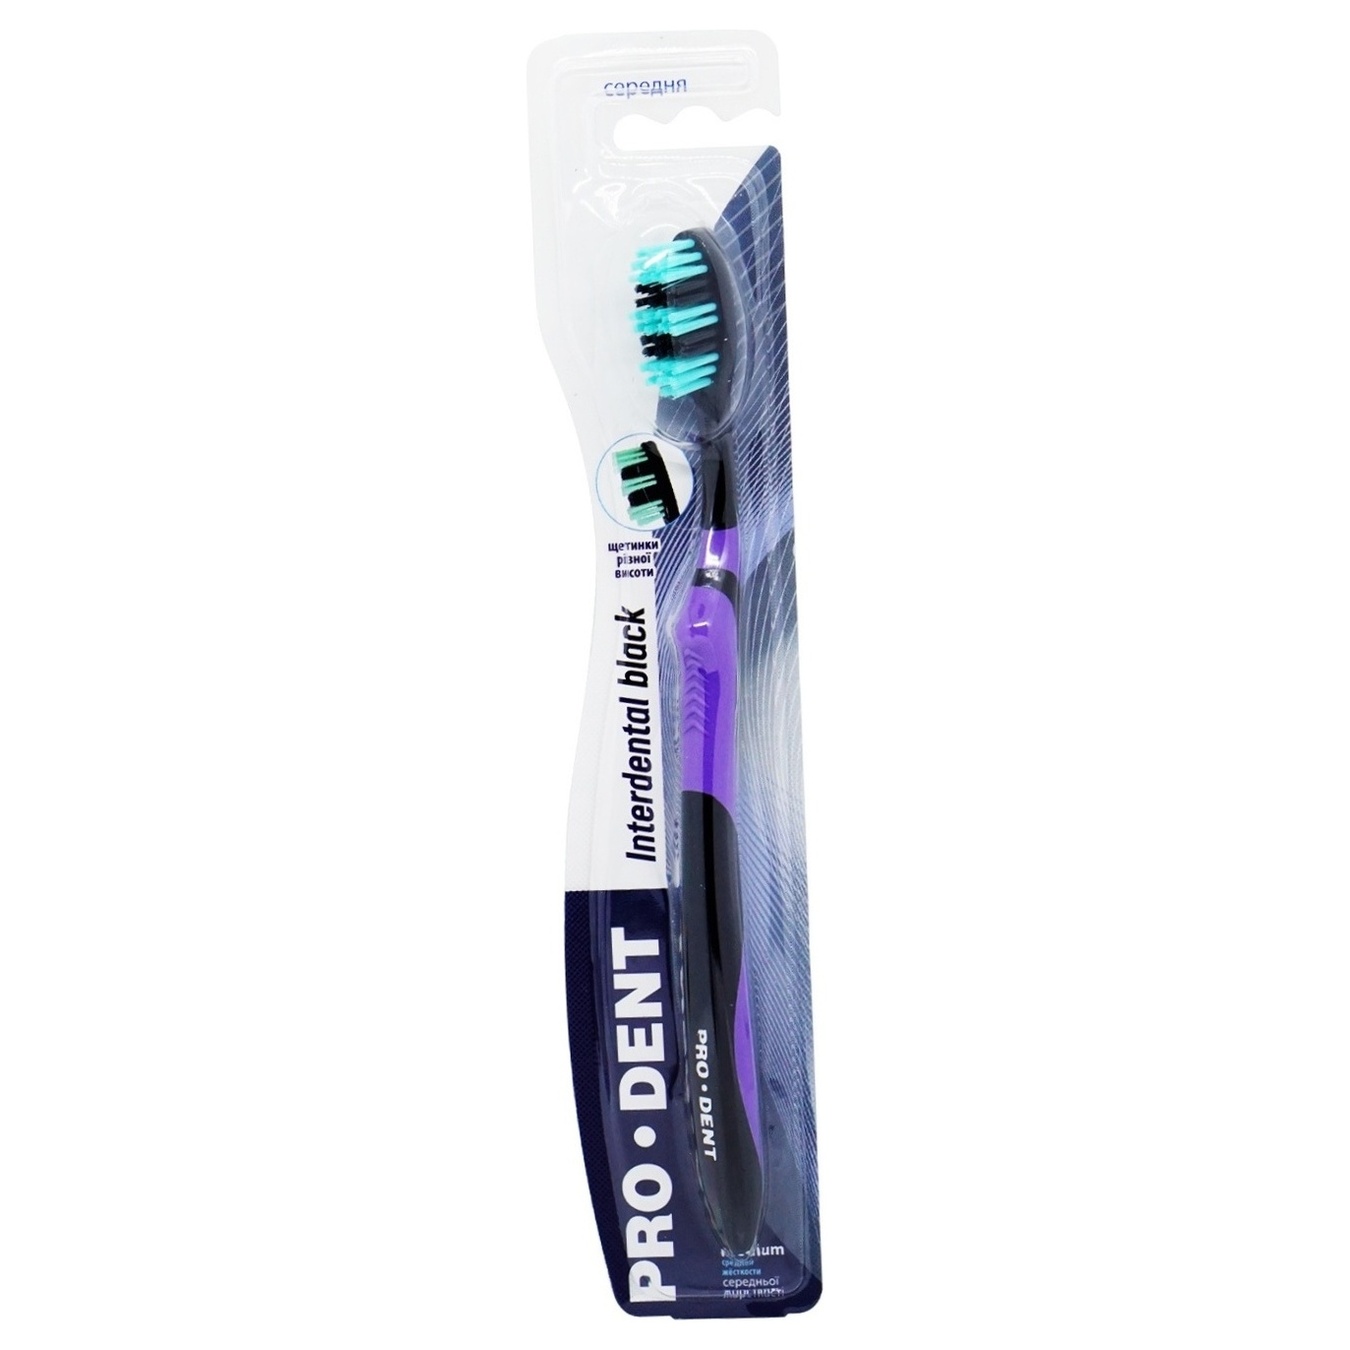 Toothbrush Pro Dent interdental black medium hardness